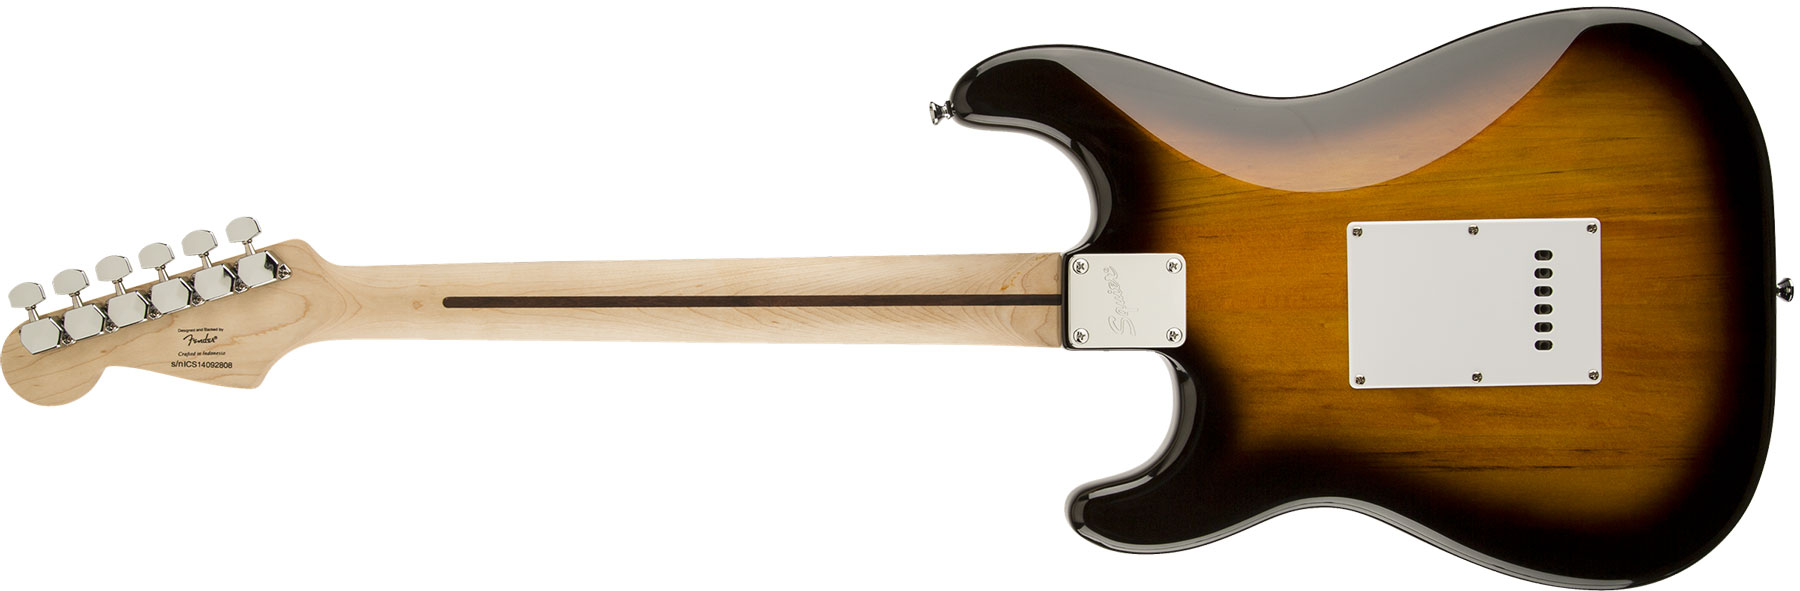 Squier Bullet Stratocaster With Tremolo Sss Lau - Brown Sunburst - Str shape electric guitar - Variation 1